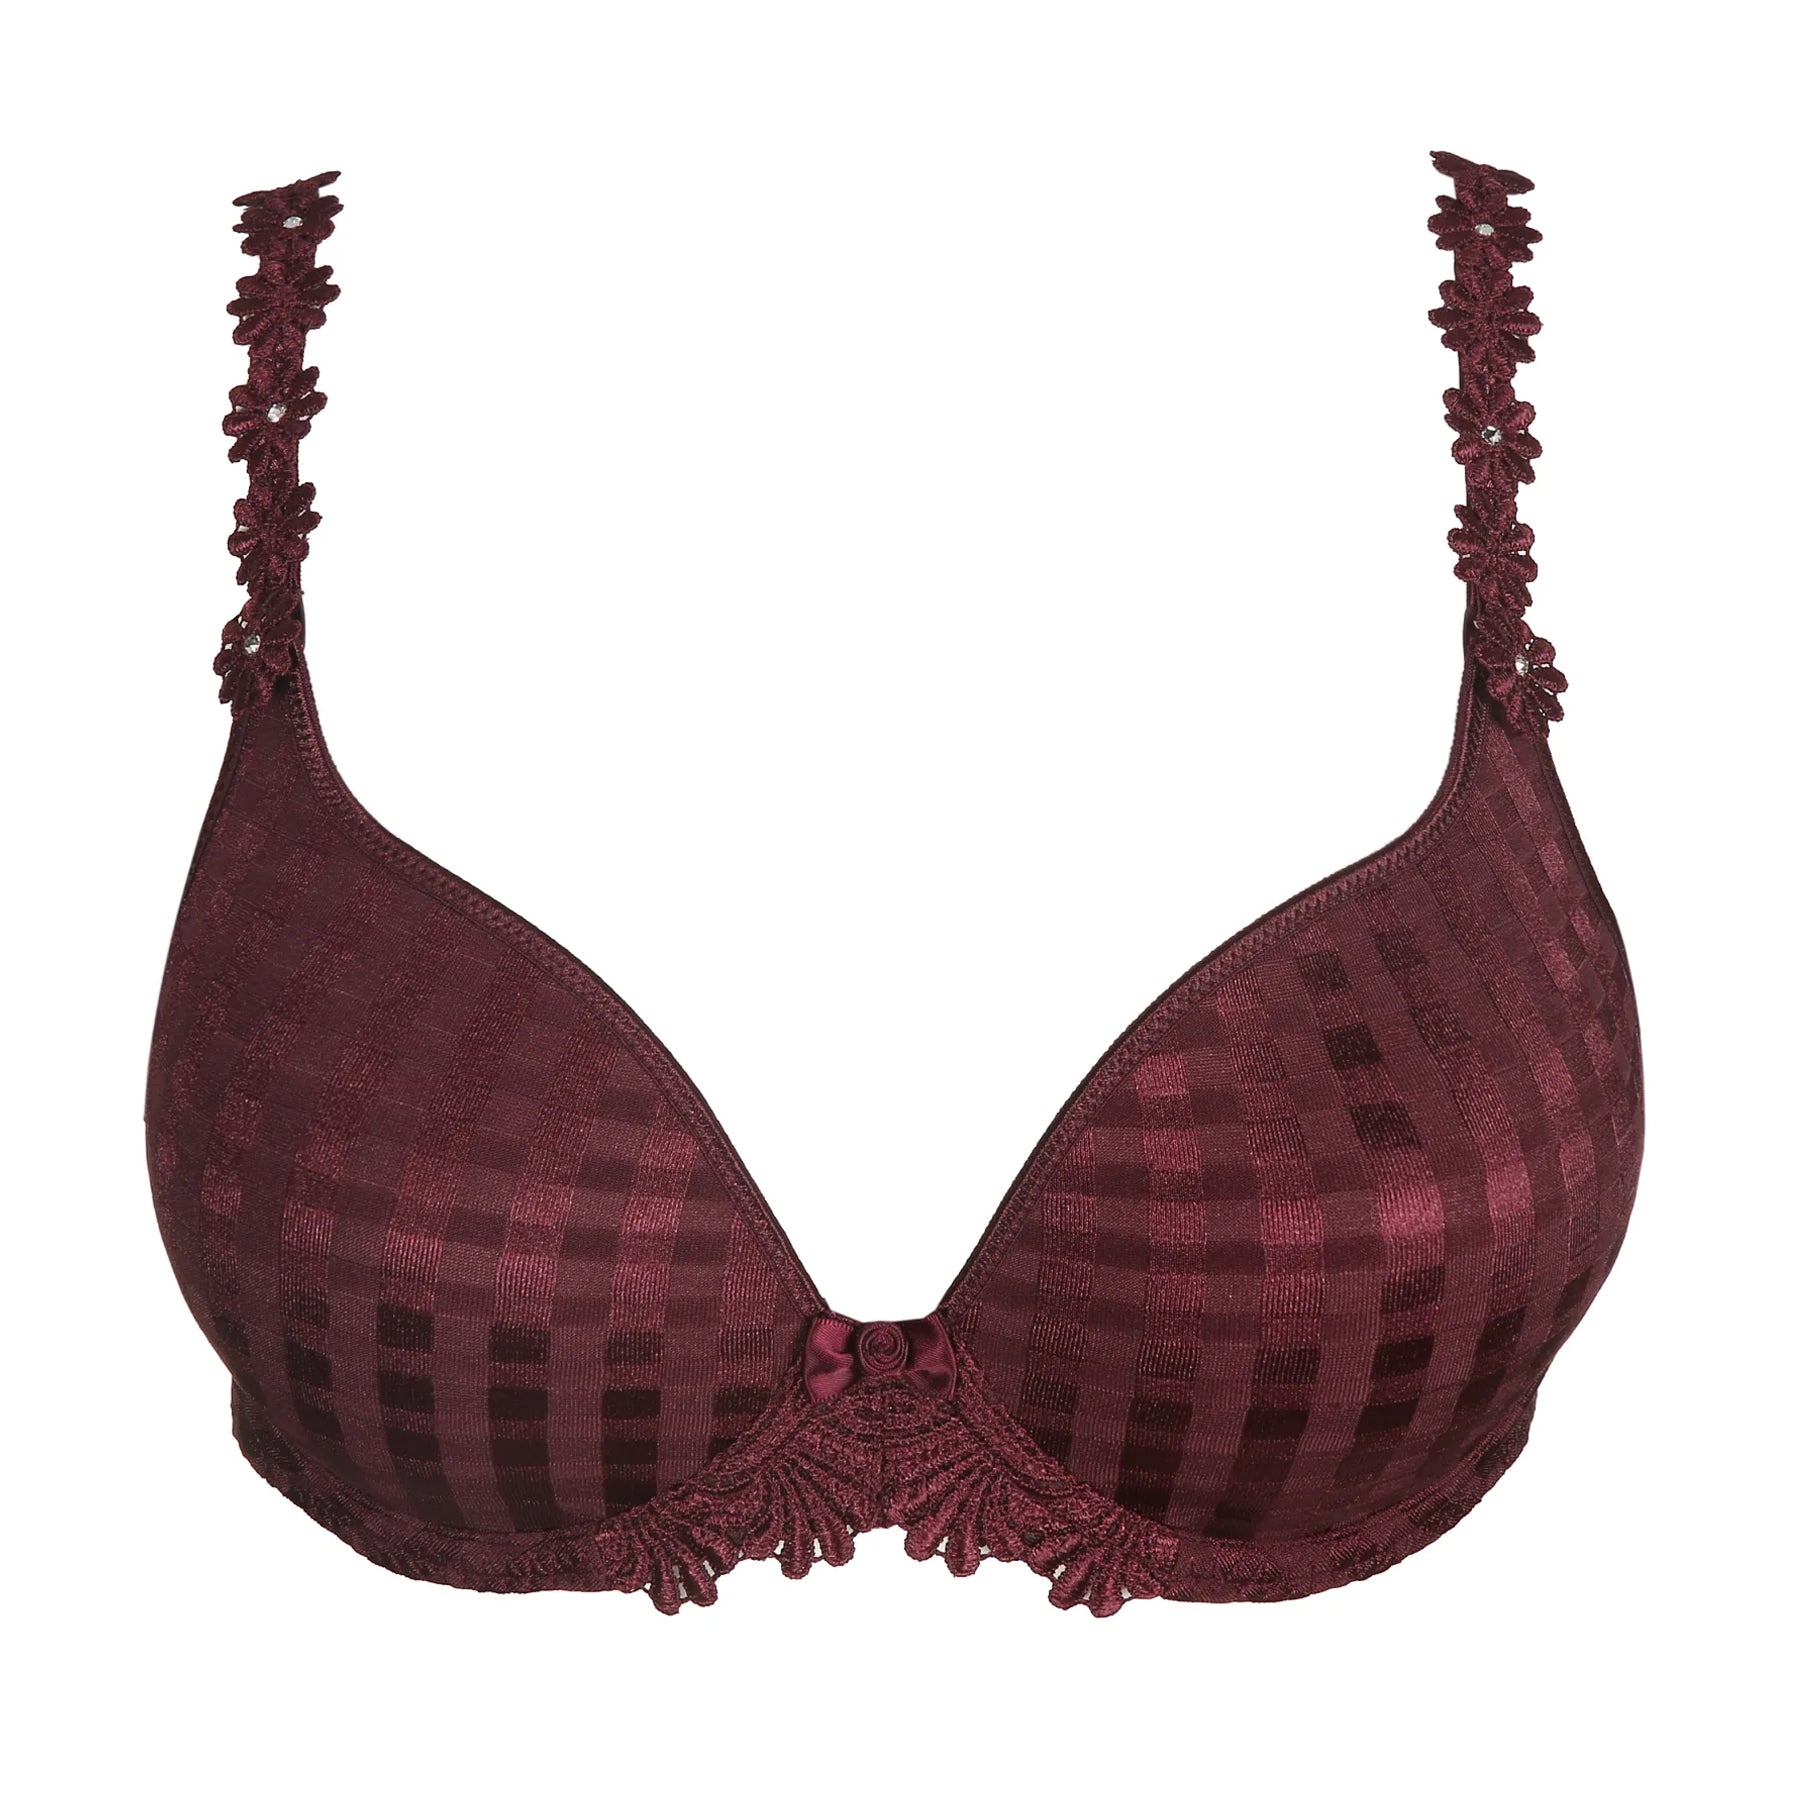 Undergarments - Padded bra 34 size Price 450 Only #undergarment